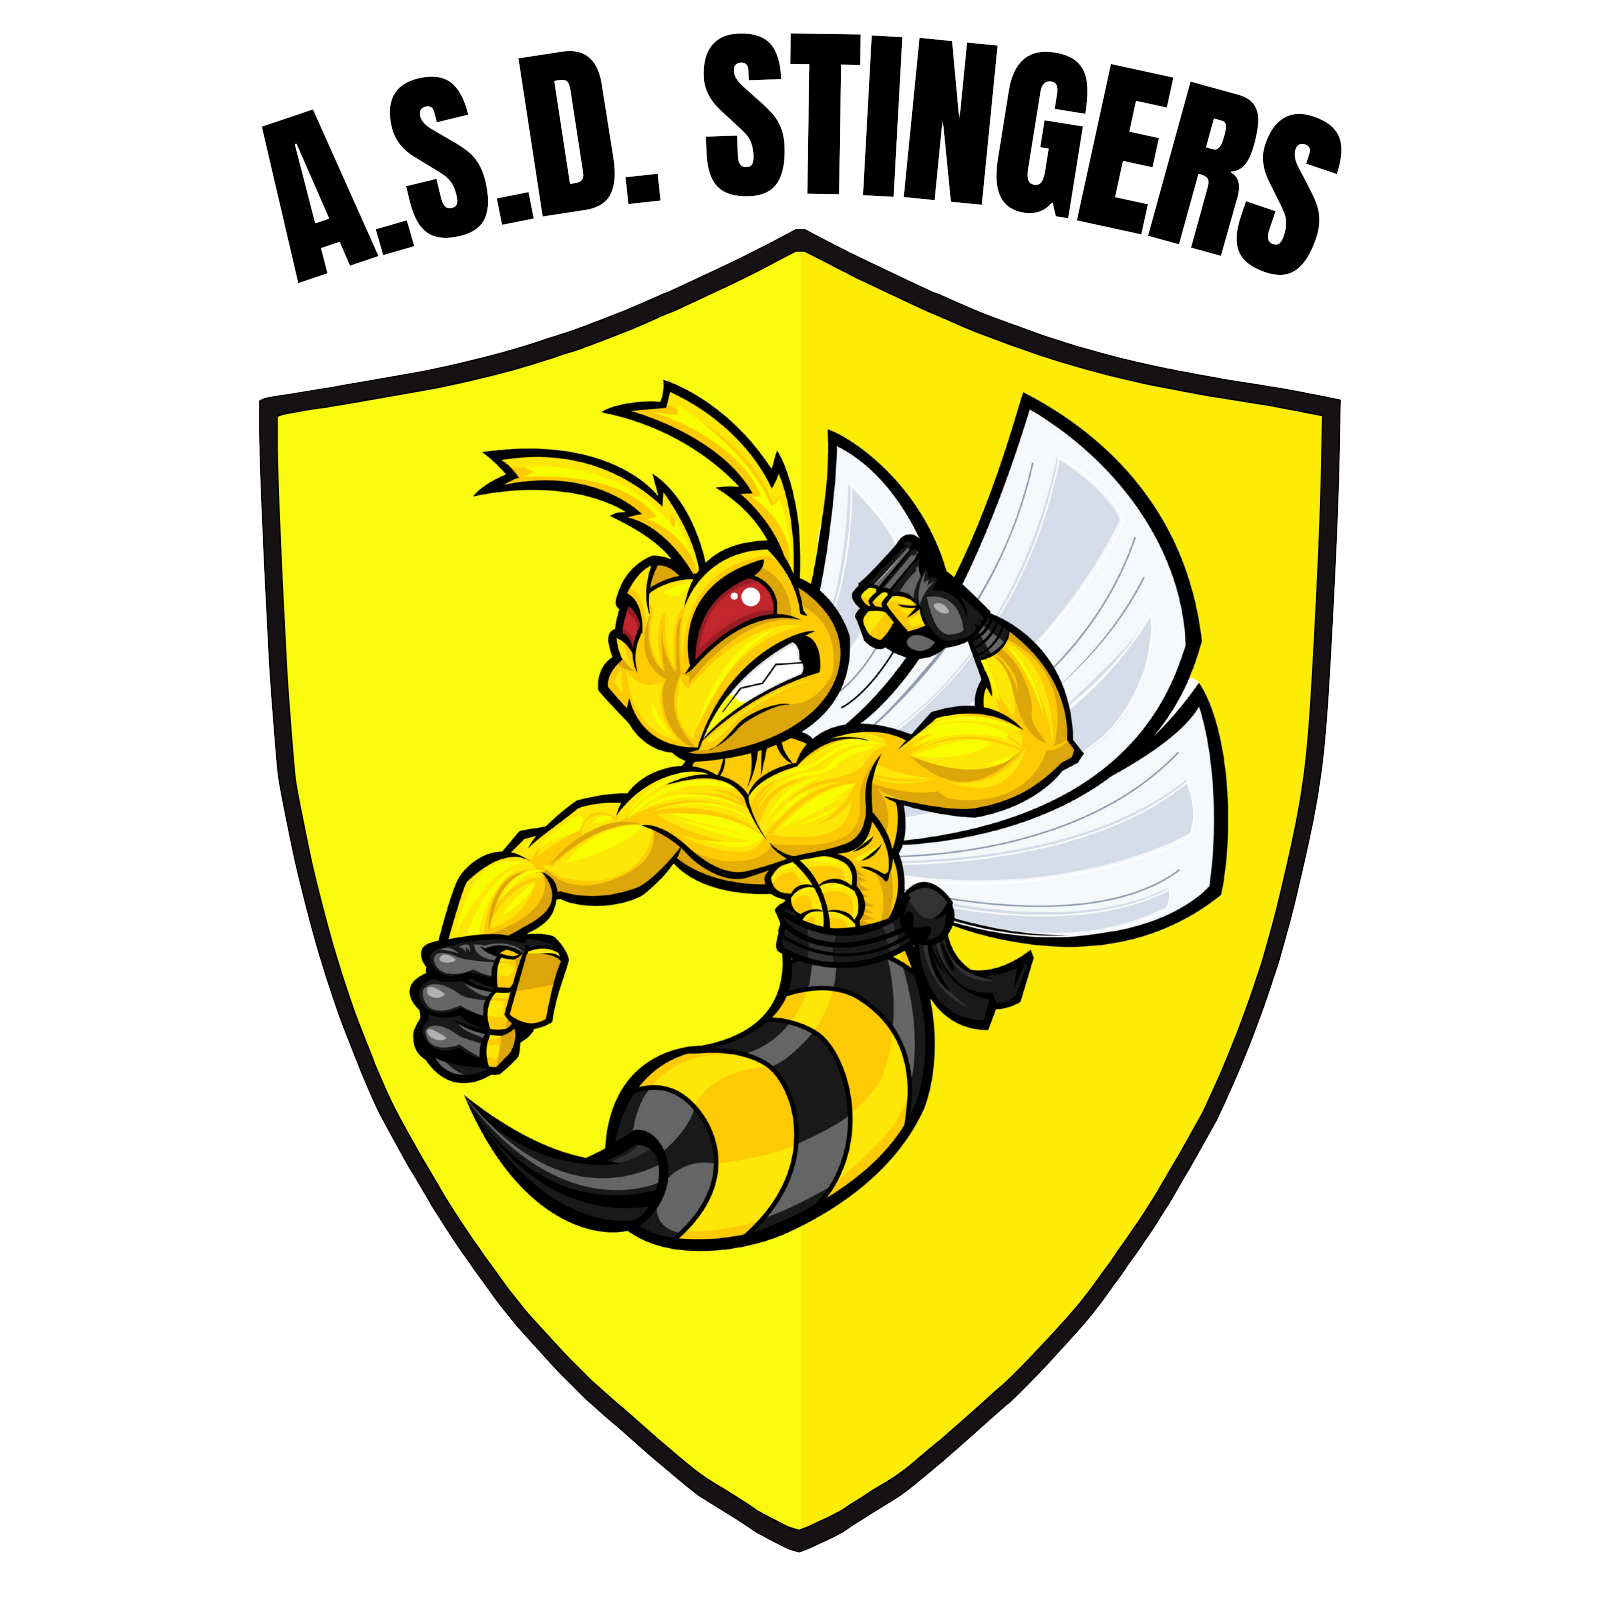 Logo Stingers Reggio Calabria